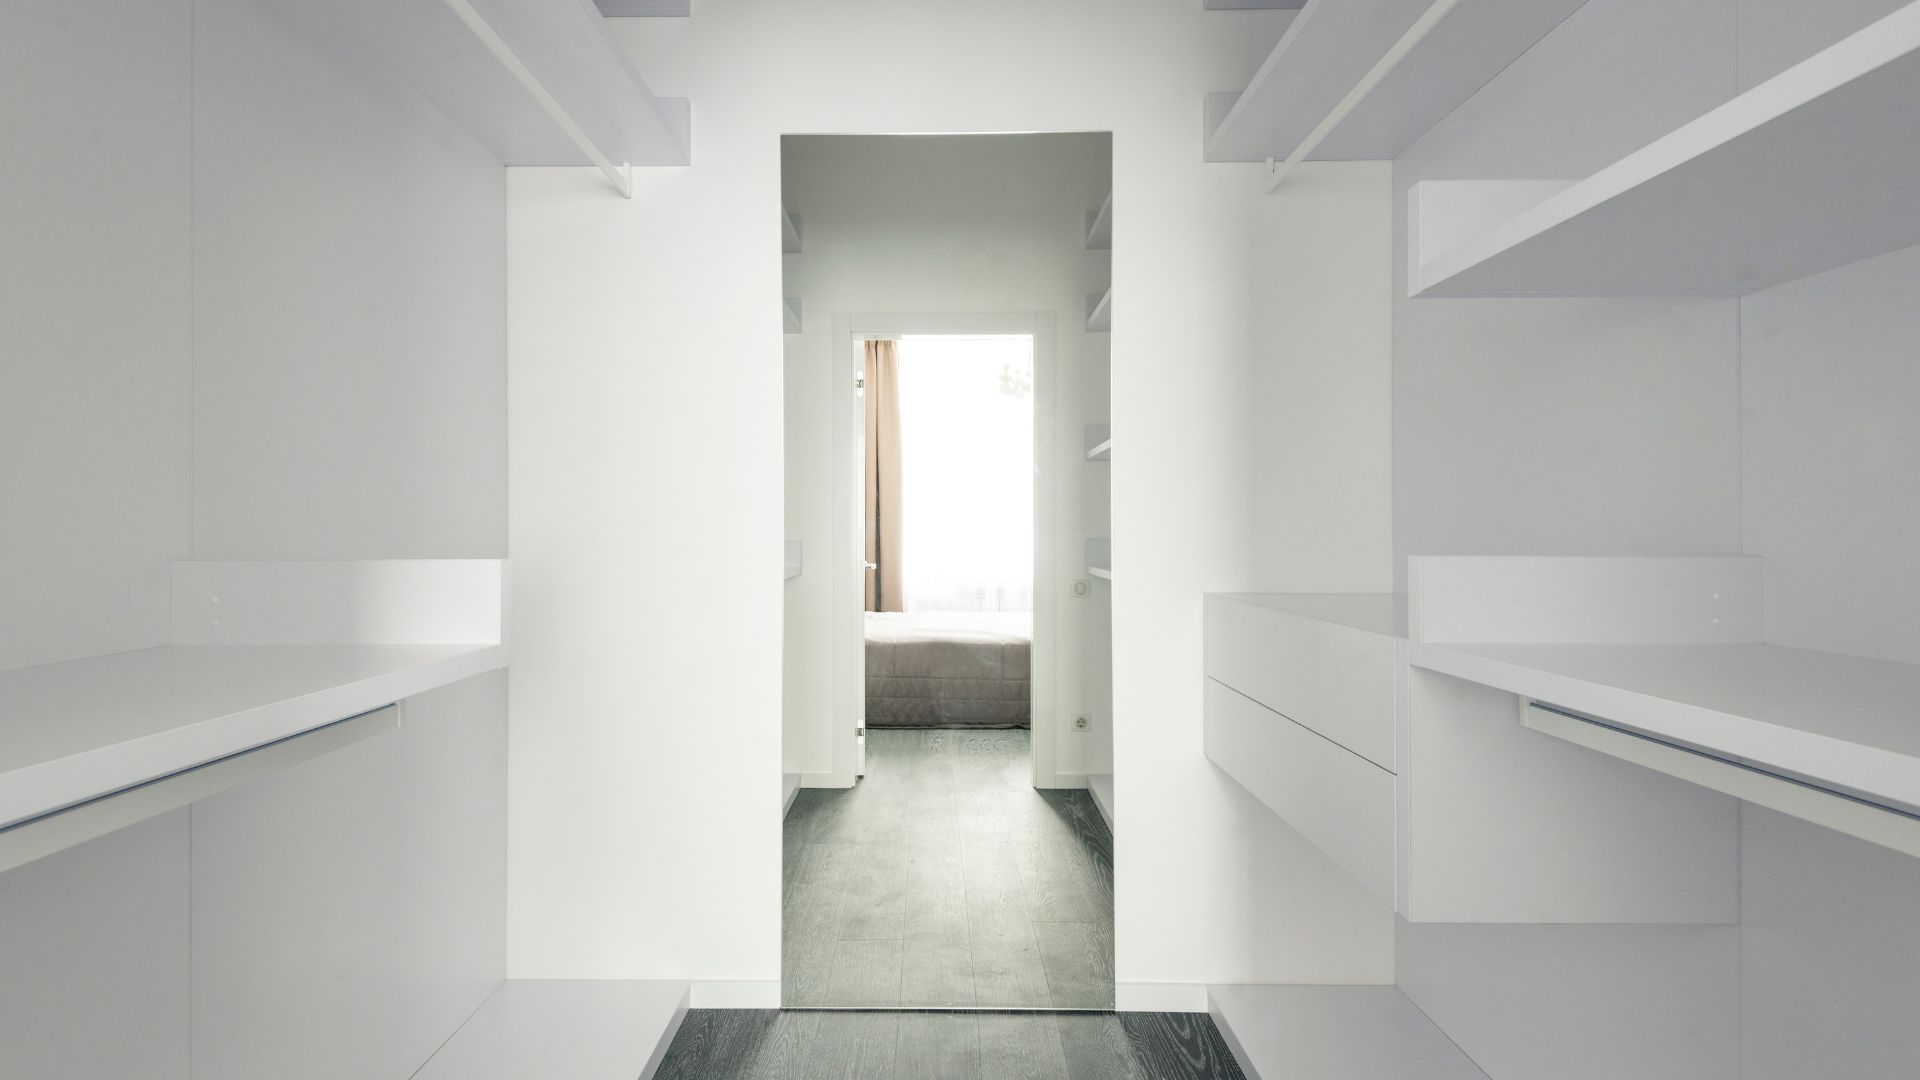 Hallway with white closet